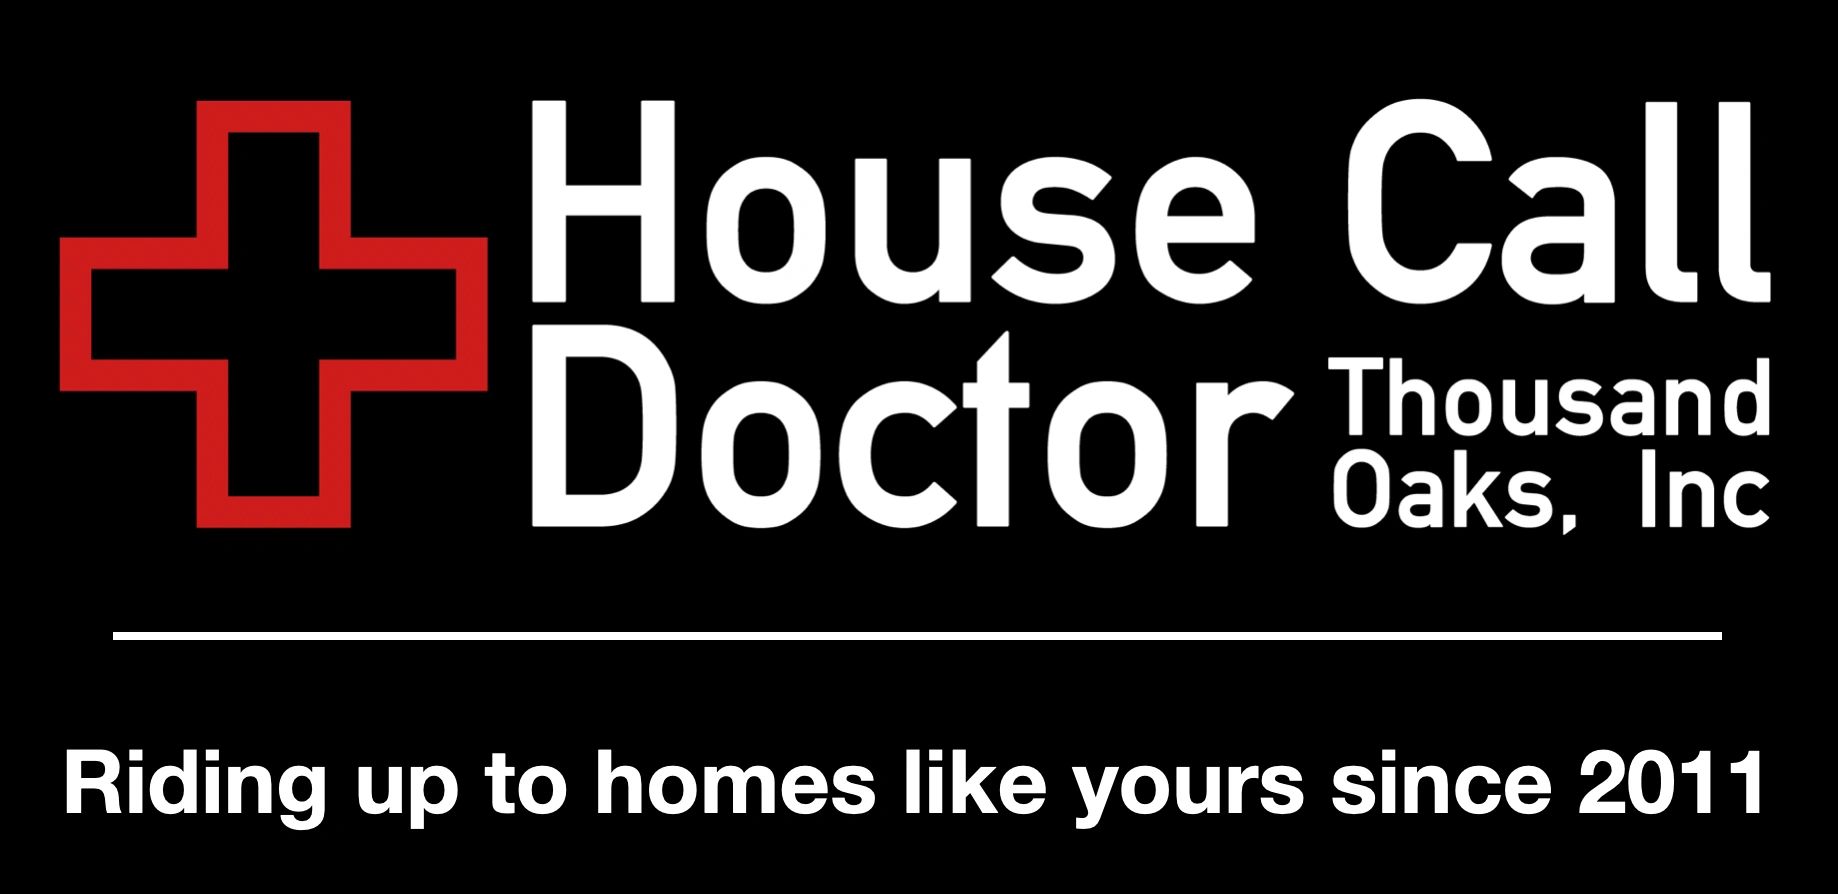 Medical Practice - House Call Doctor Thousand Oaks, Inc.